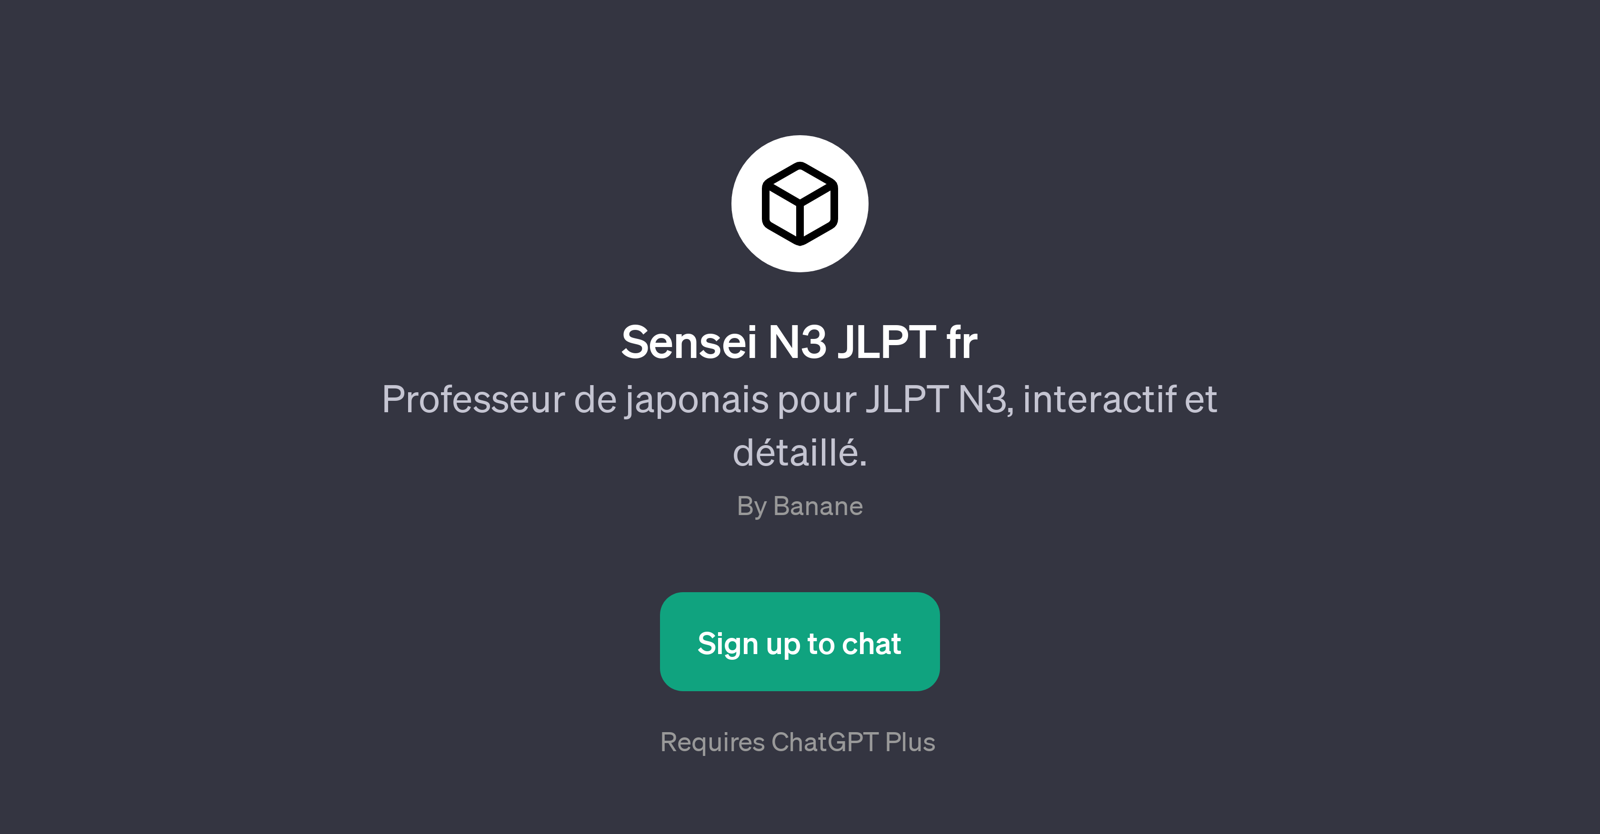 Sensei N3 JLPT fr website